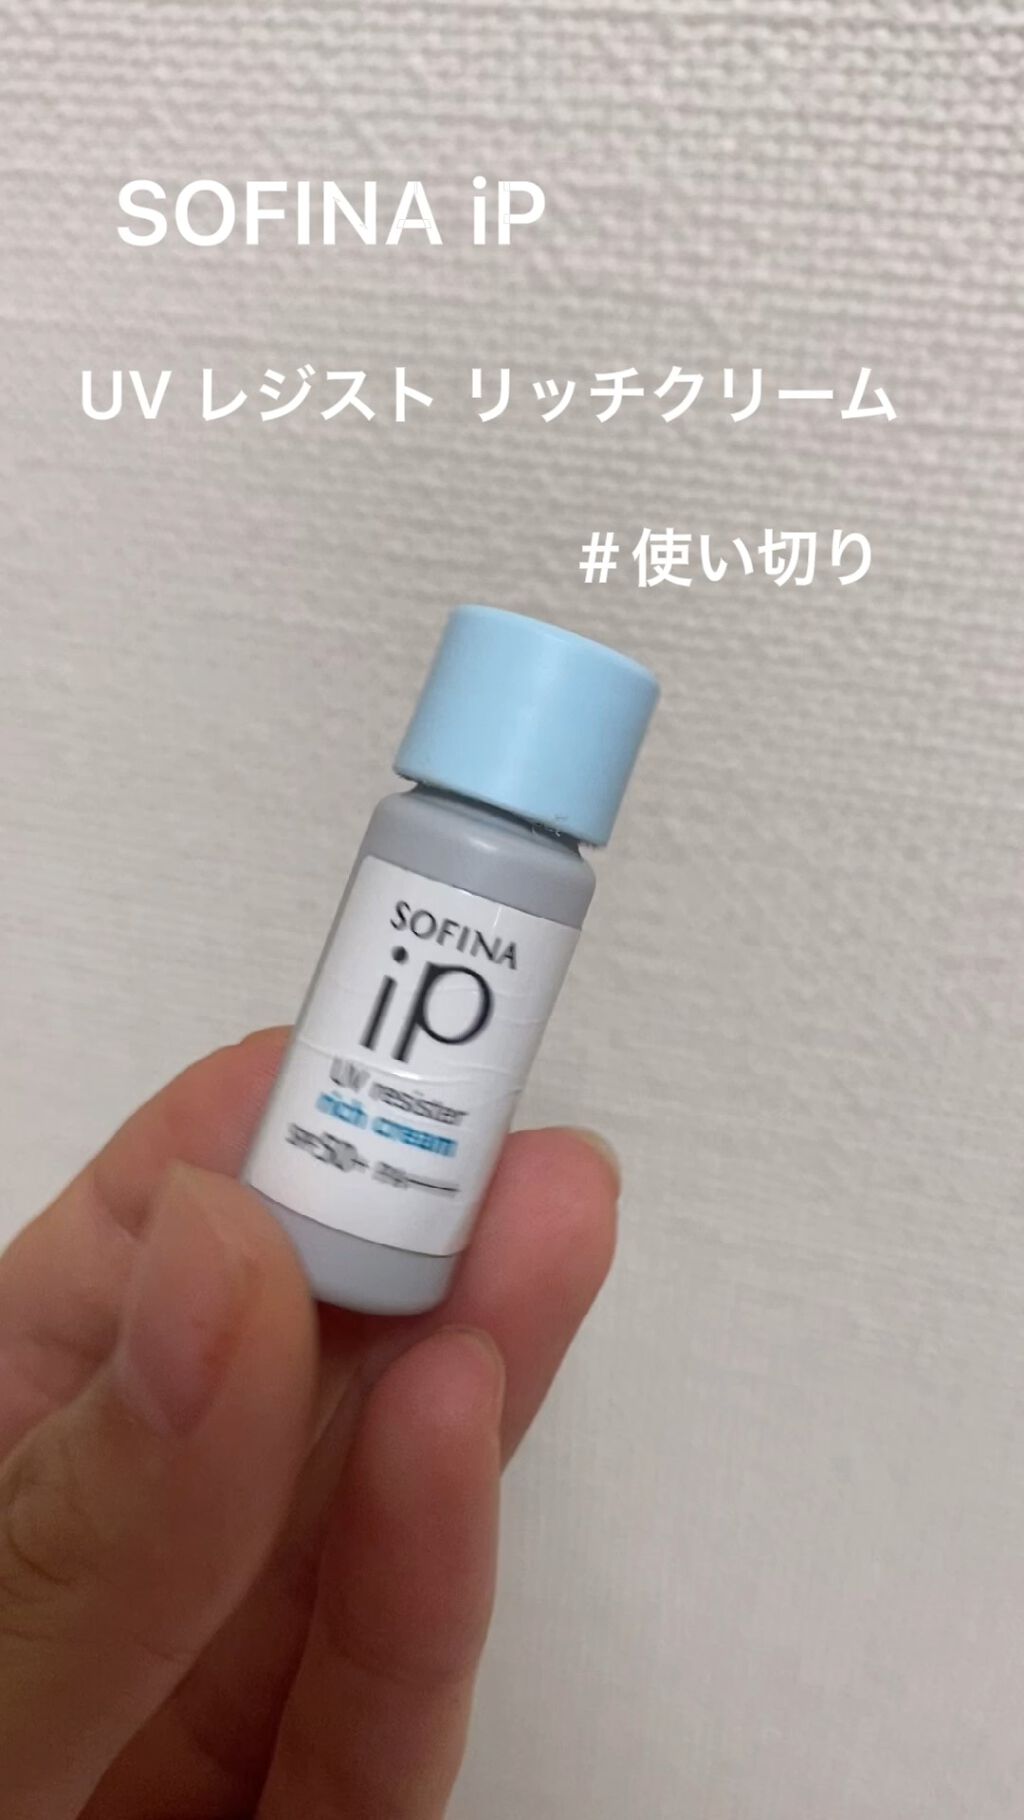 SOFINA iP UV レジスト リッチクリーム/SOFINA iP/日焼け止め・UVケアの動画クチコミ3つ目